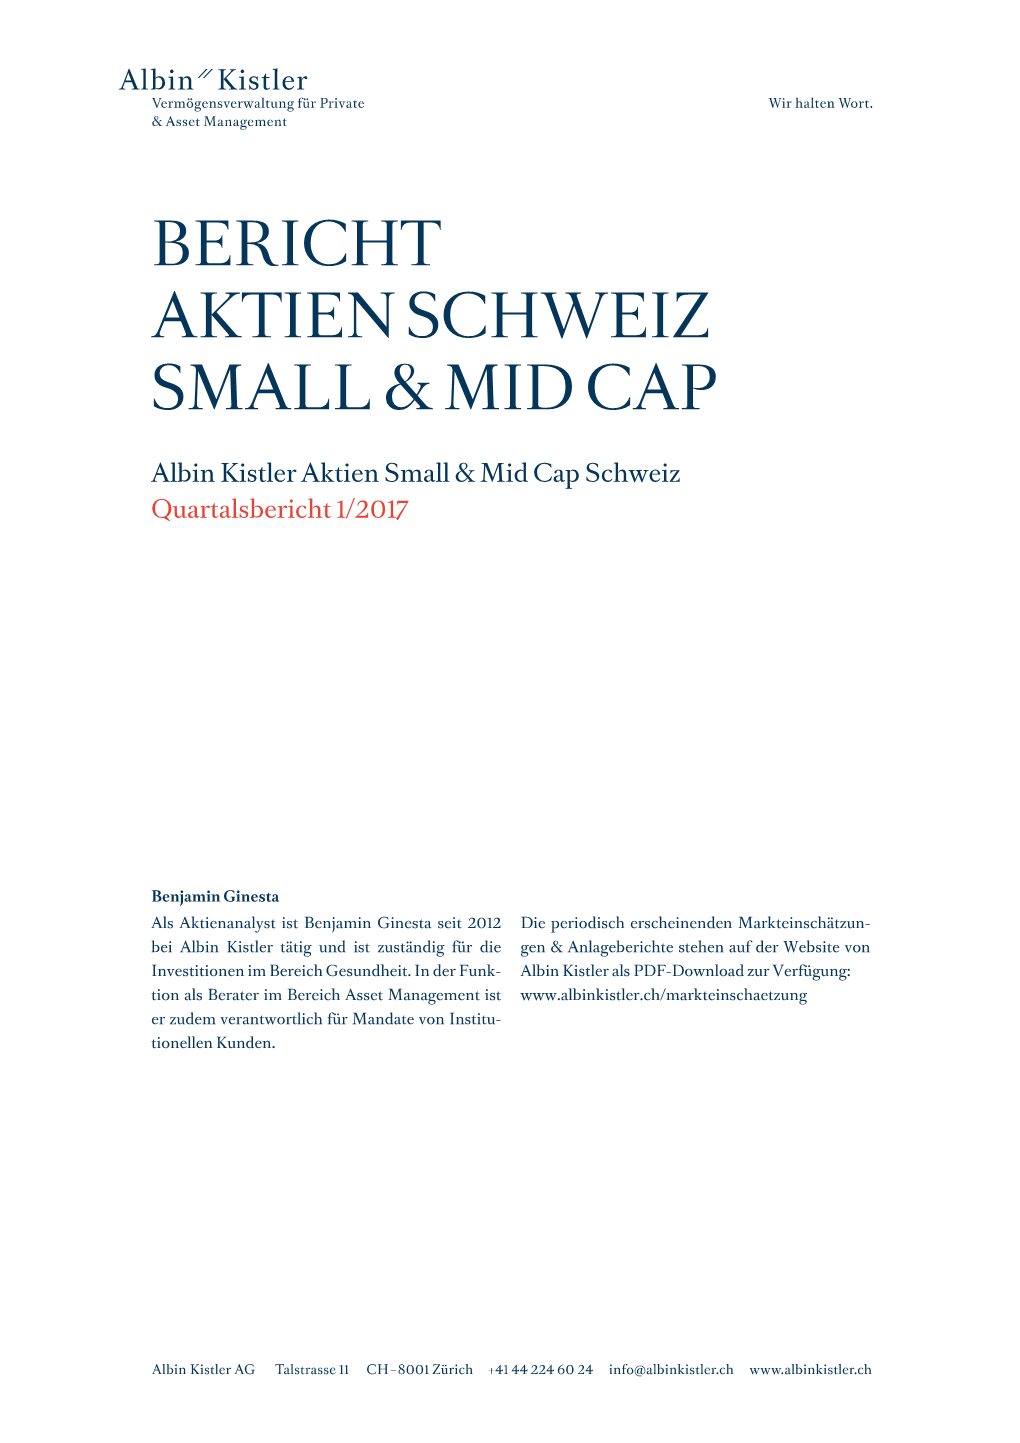 Marktbericht Aktien Schweiz Small Mid Cap 01 2017